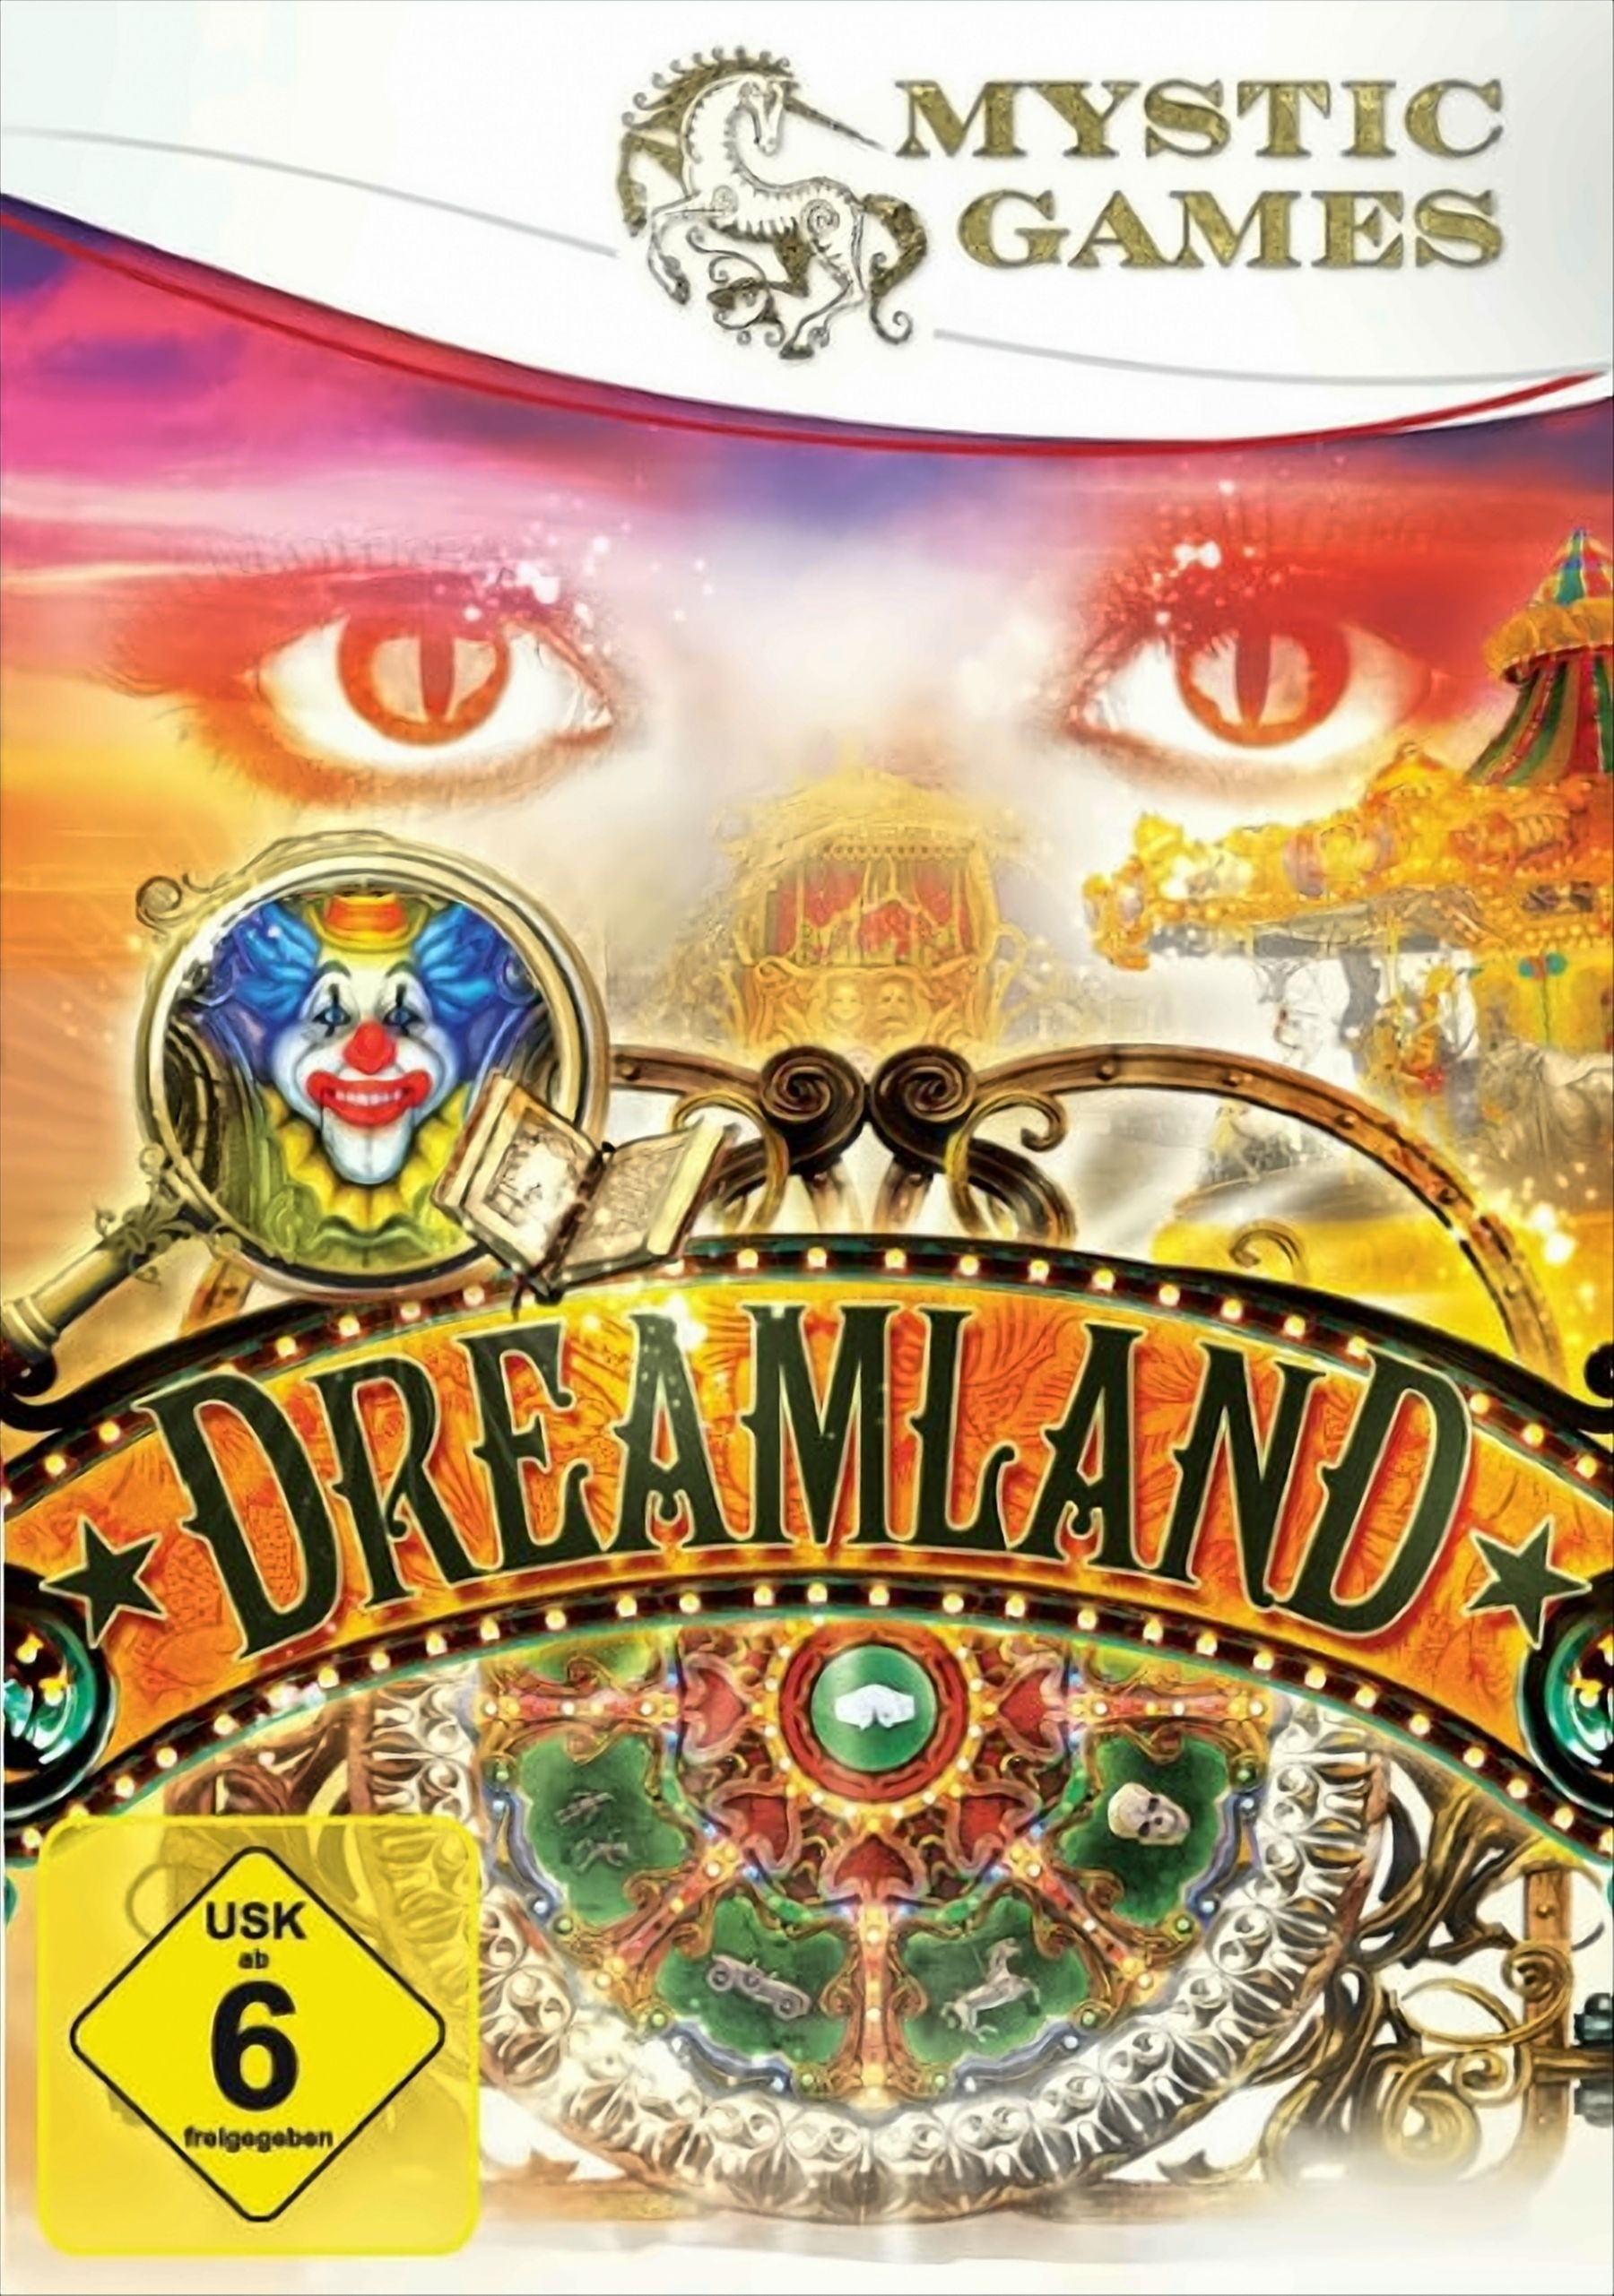 [PC] - Dreamland